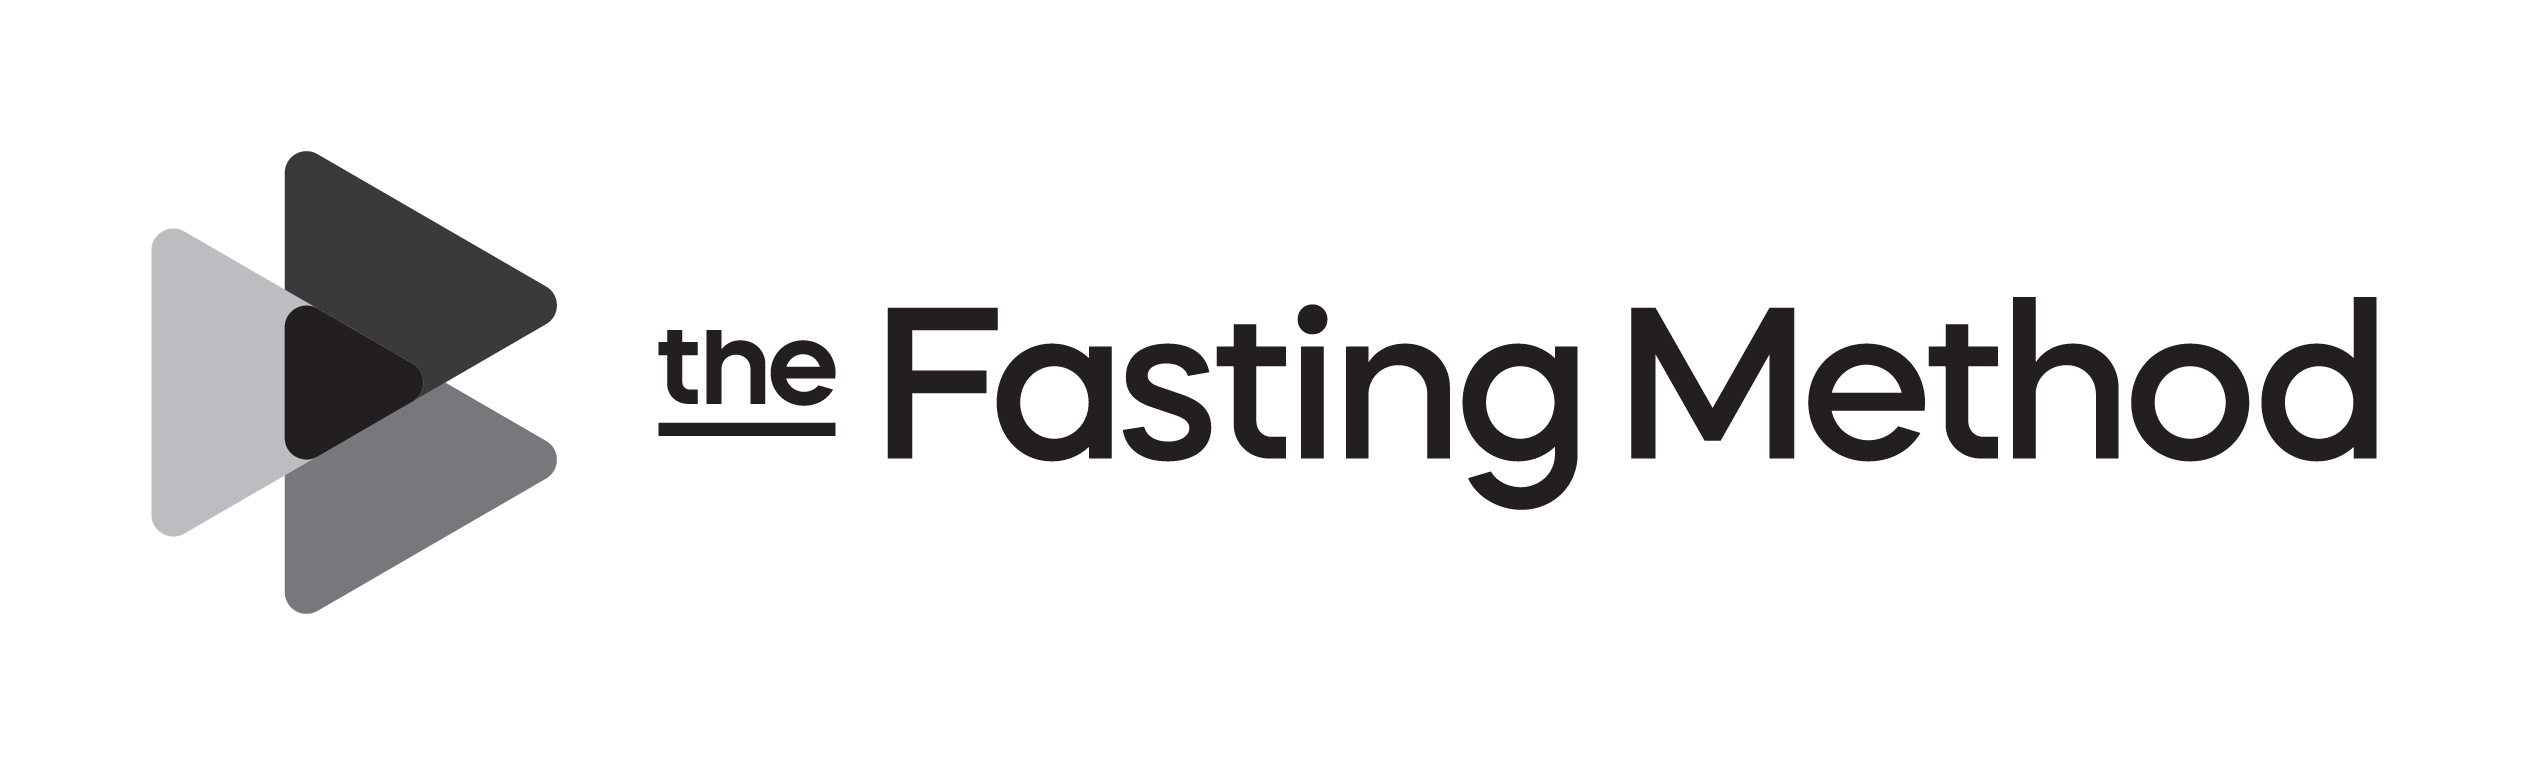 the fasting method logo